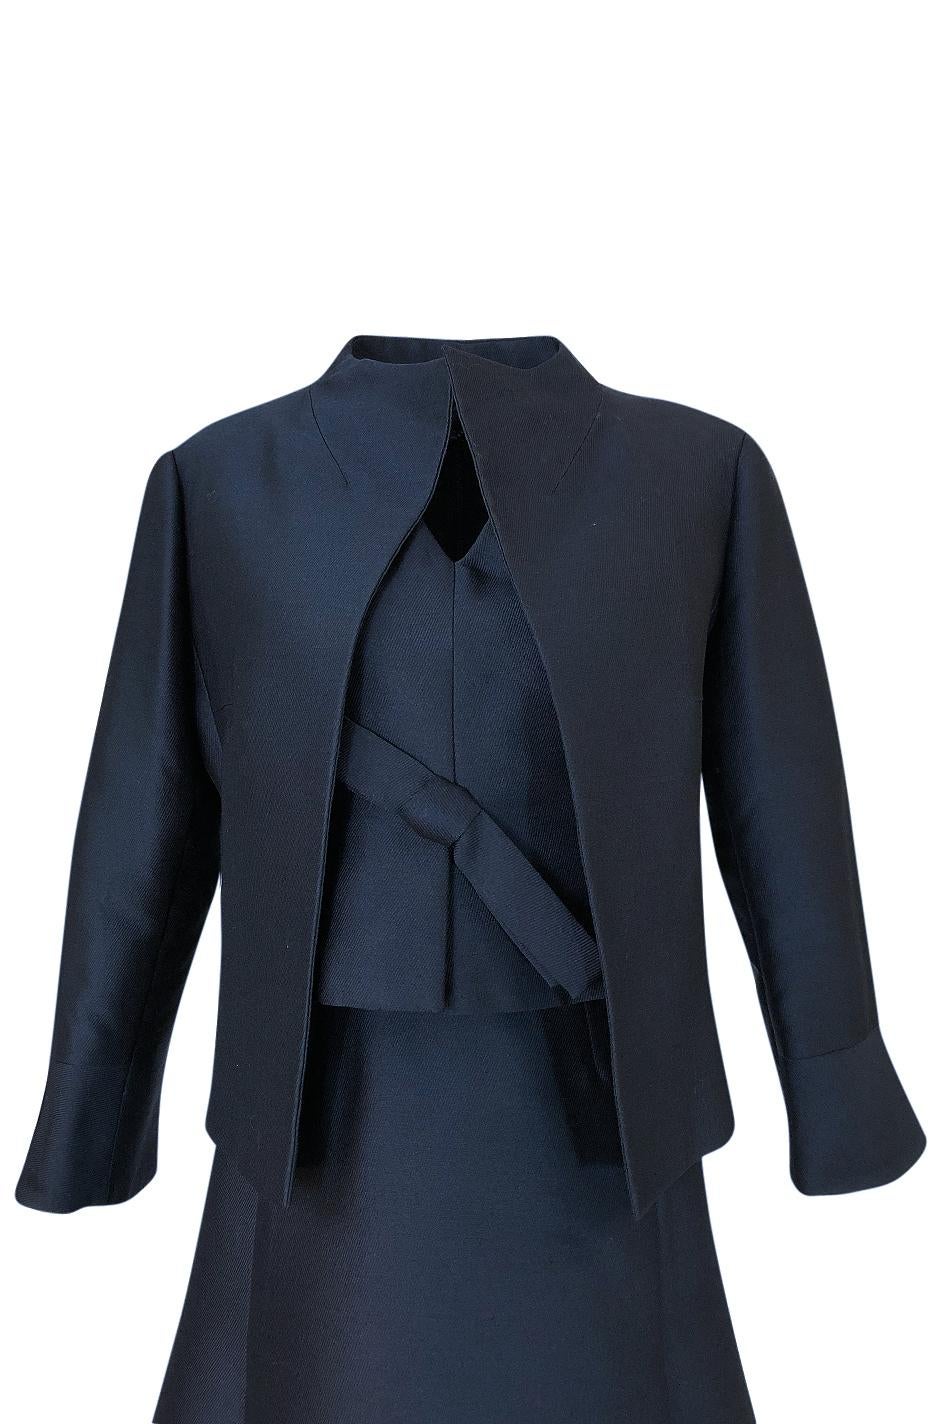 1950s Christian Dior Midnight Blue Demi-Couture 3 Piece Dress Suit 7